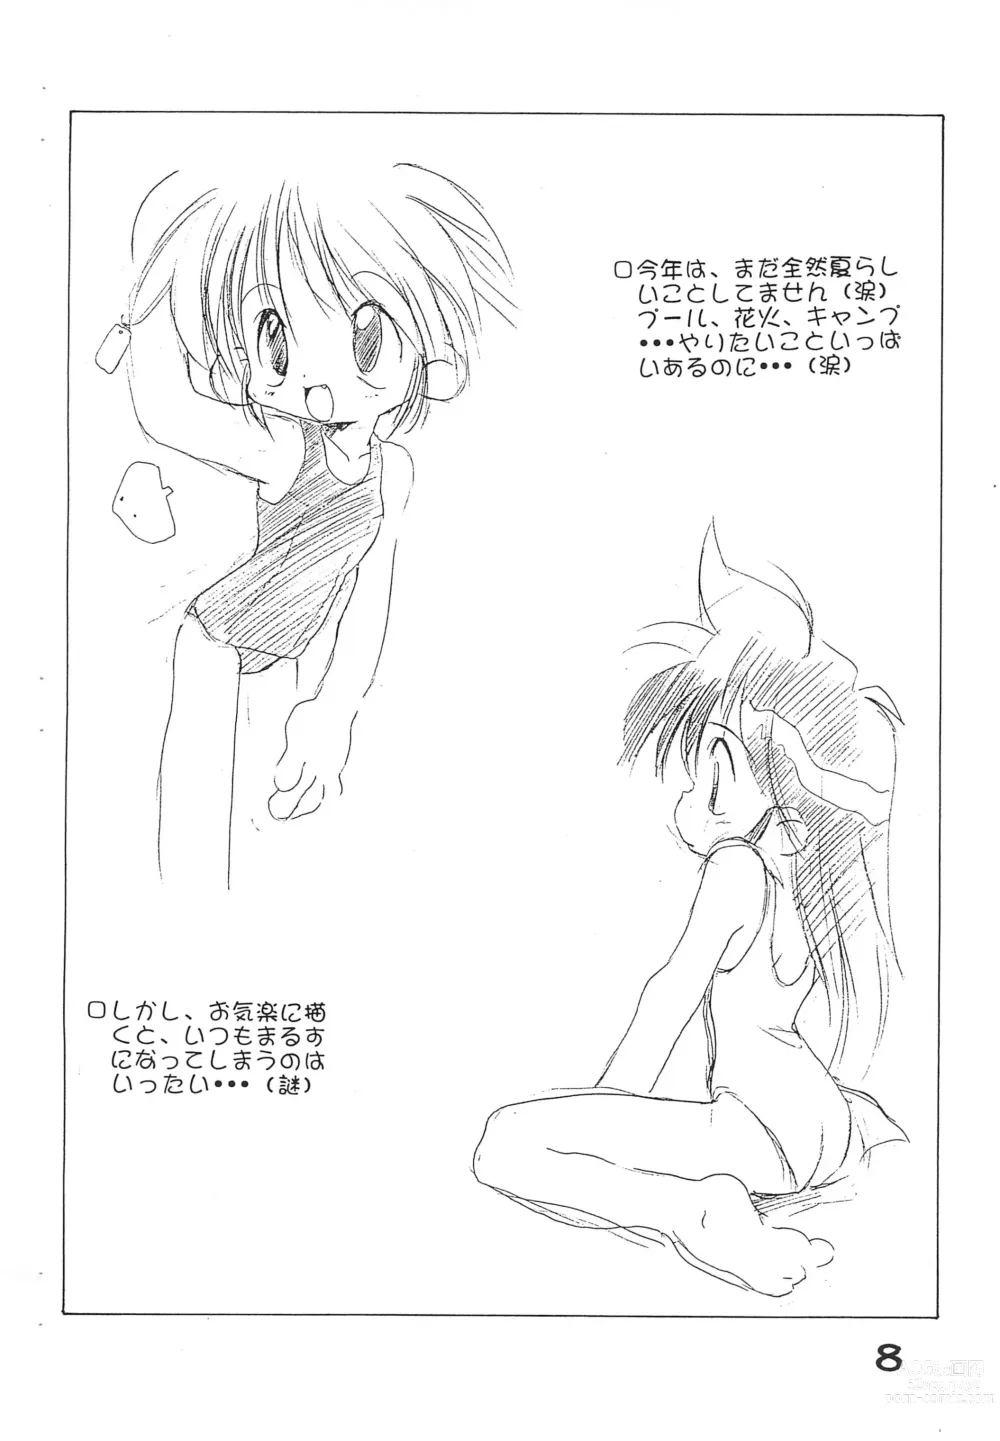 Page 8 of doujinshi RR-KGK VOL.01